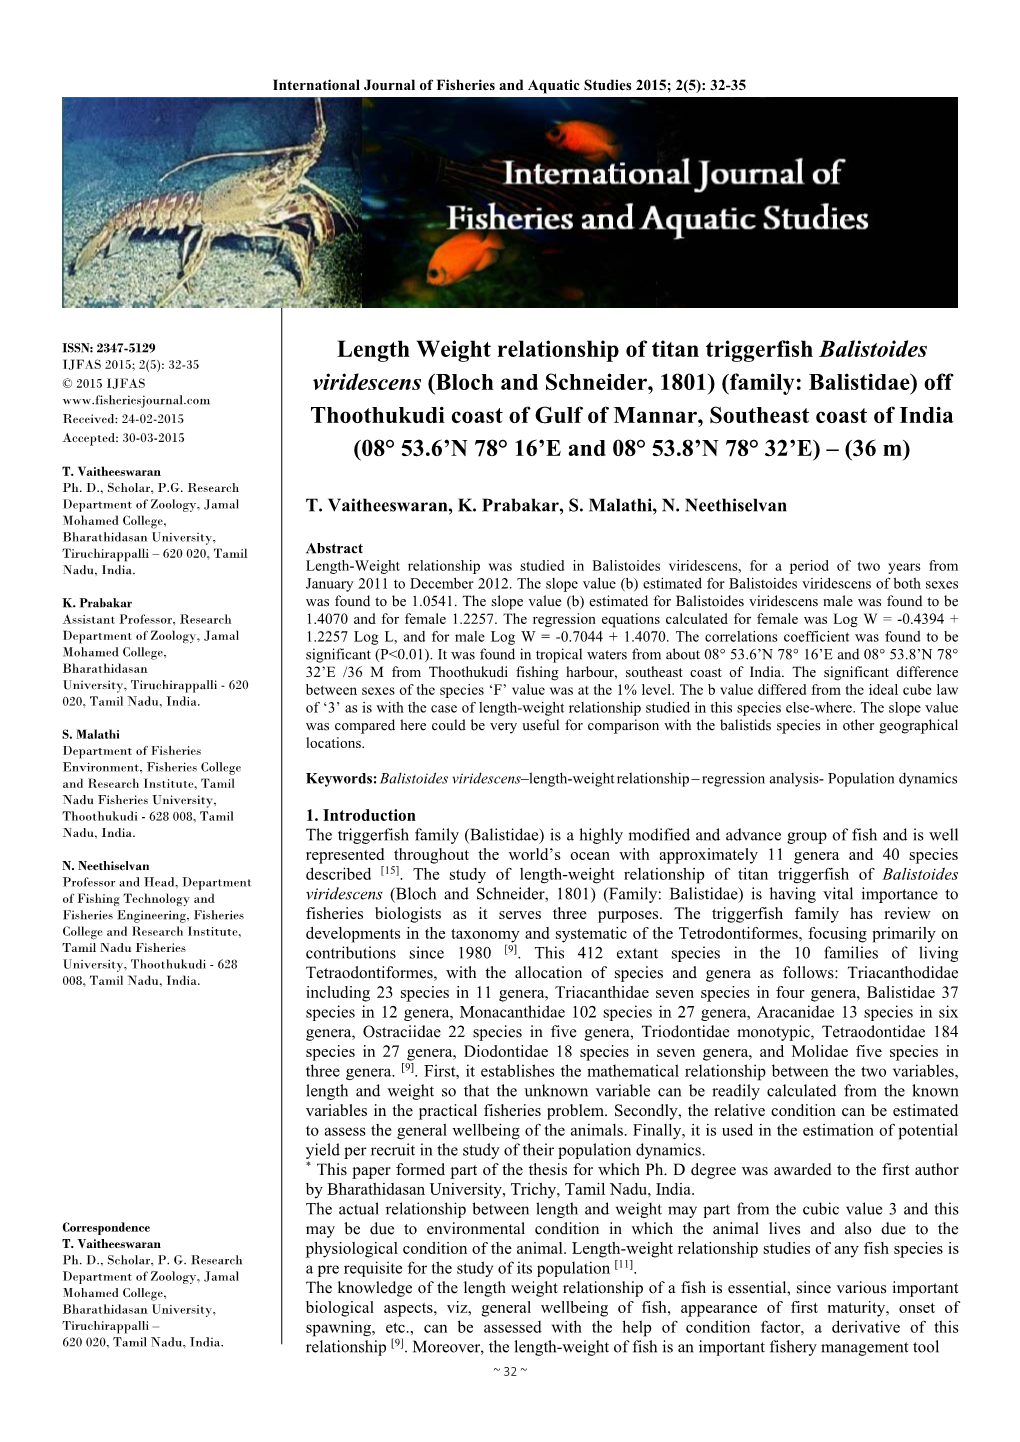 Length Weight Relationship of Titan Triggerfish Balistoides Viridescens